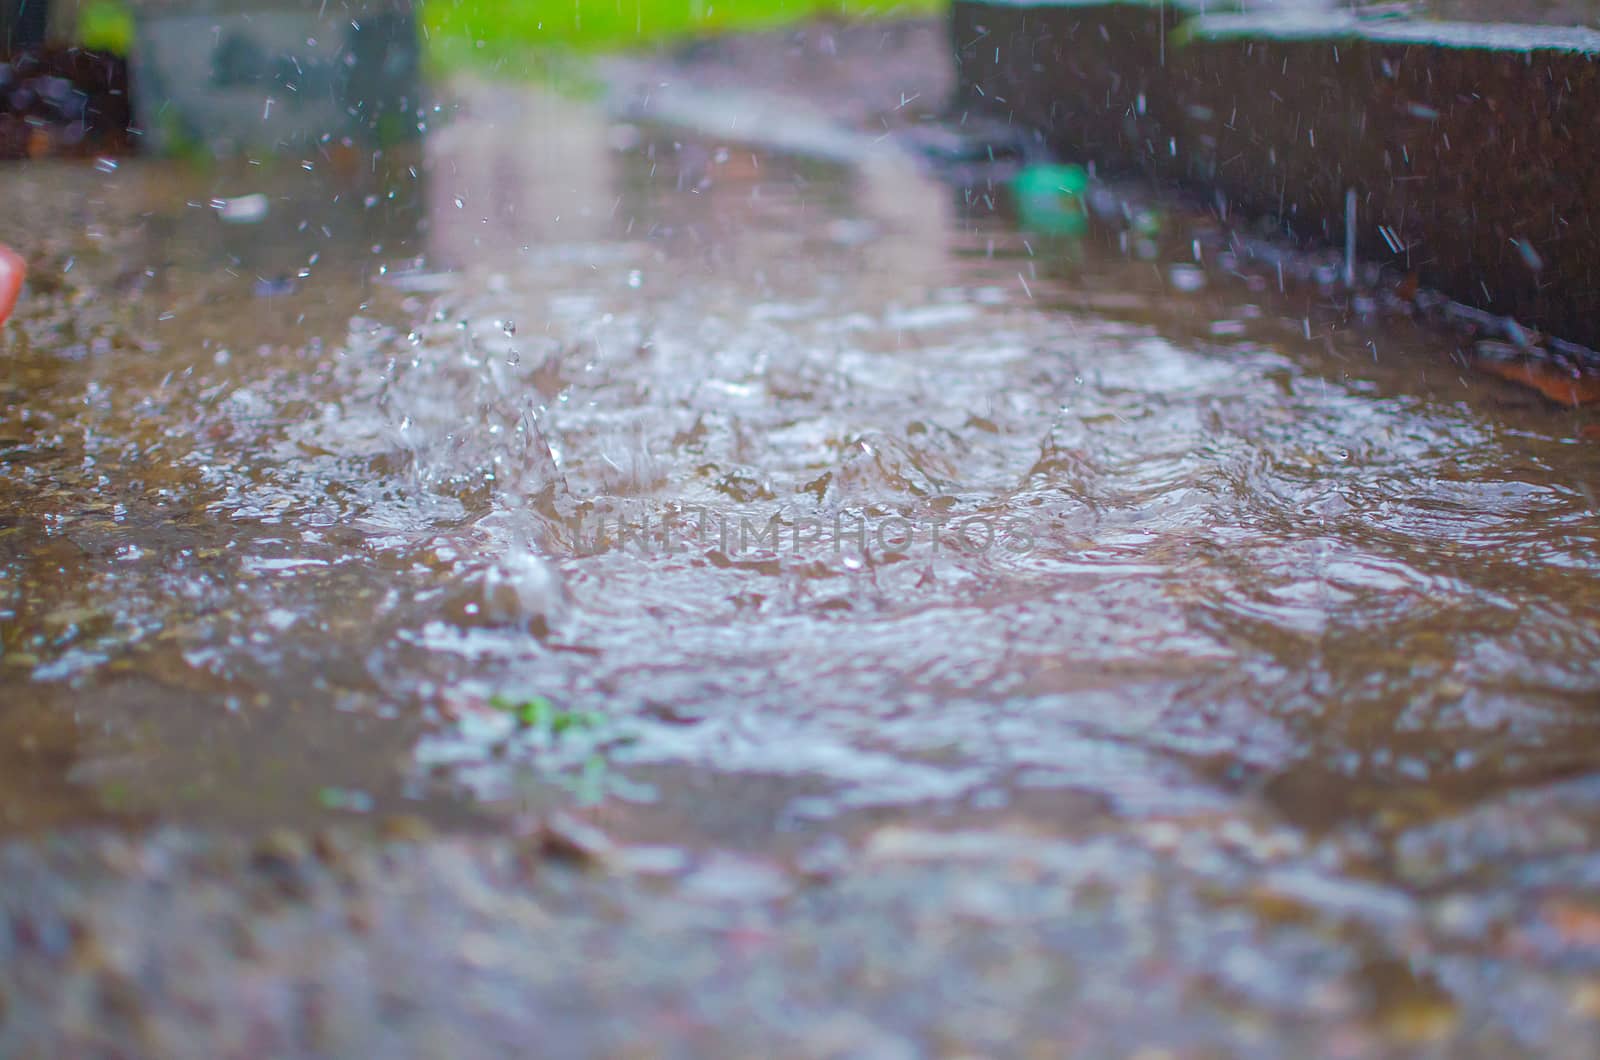 Drops of heavy rain on sidewalk surface. Rain water on the surface of the flood the sidewalk on the city street.